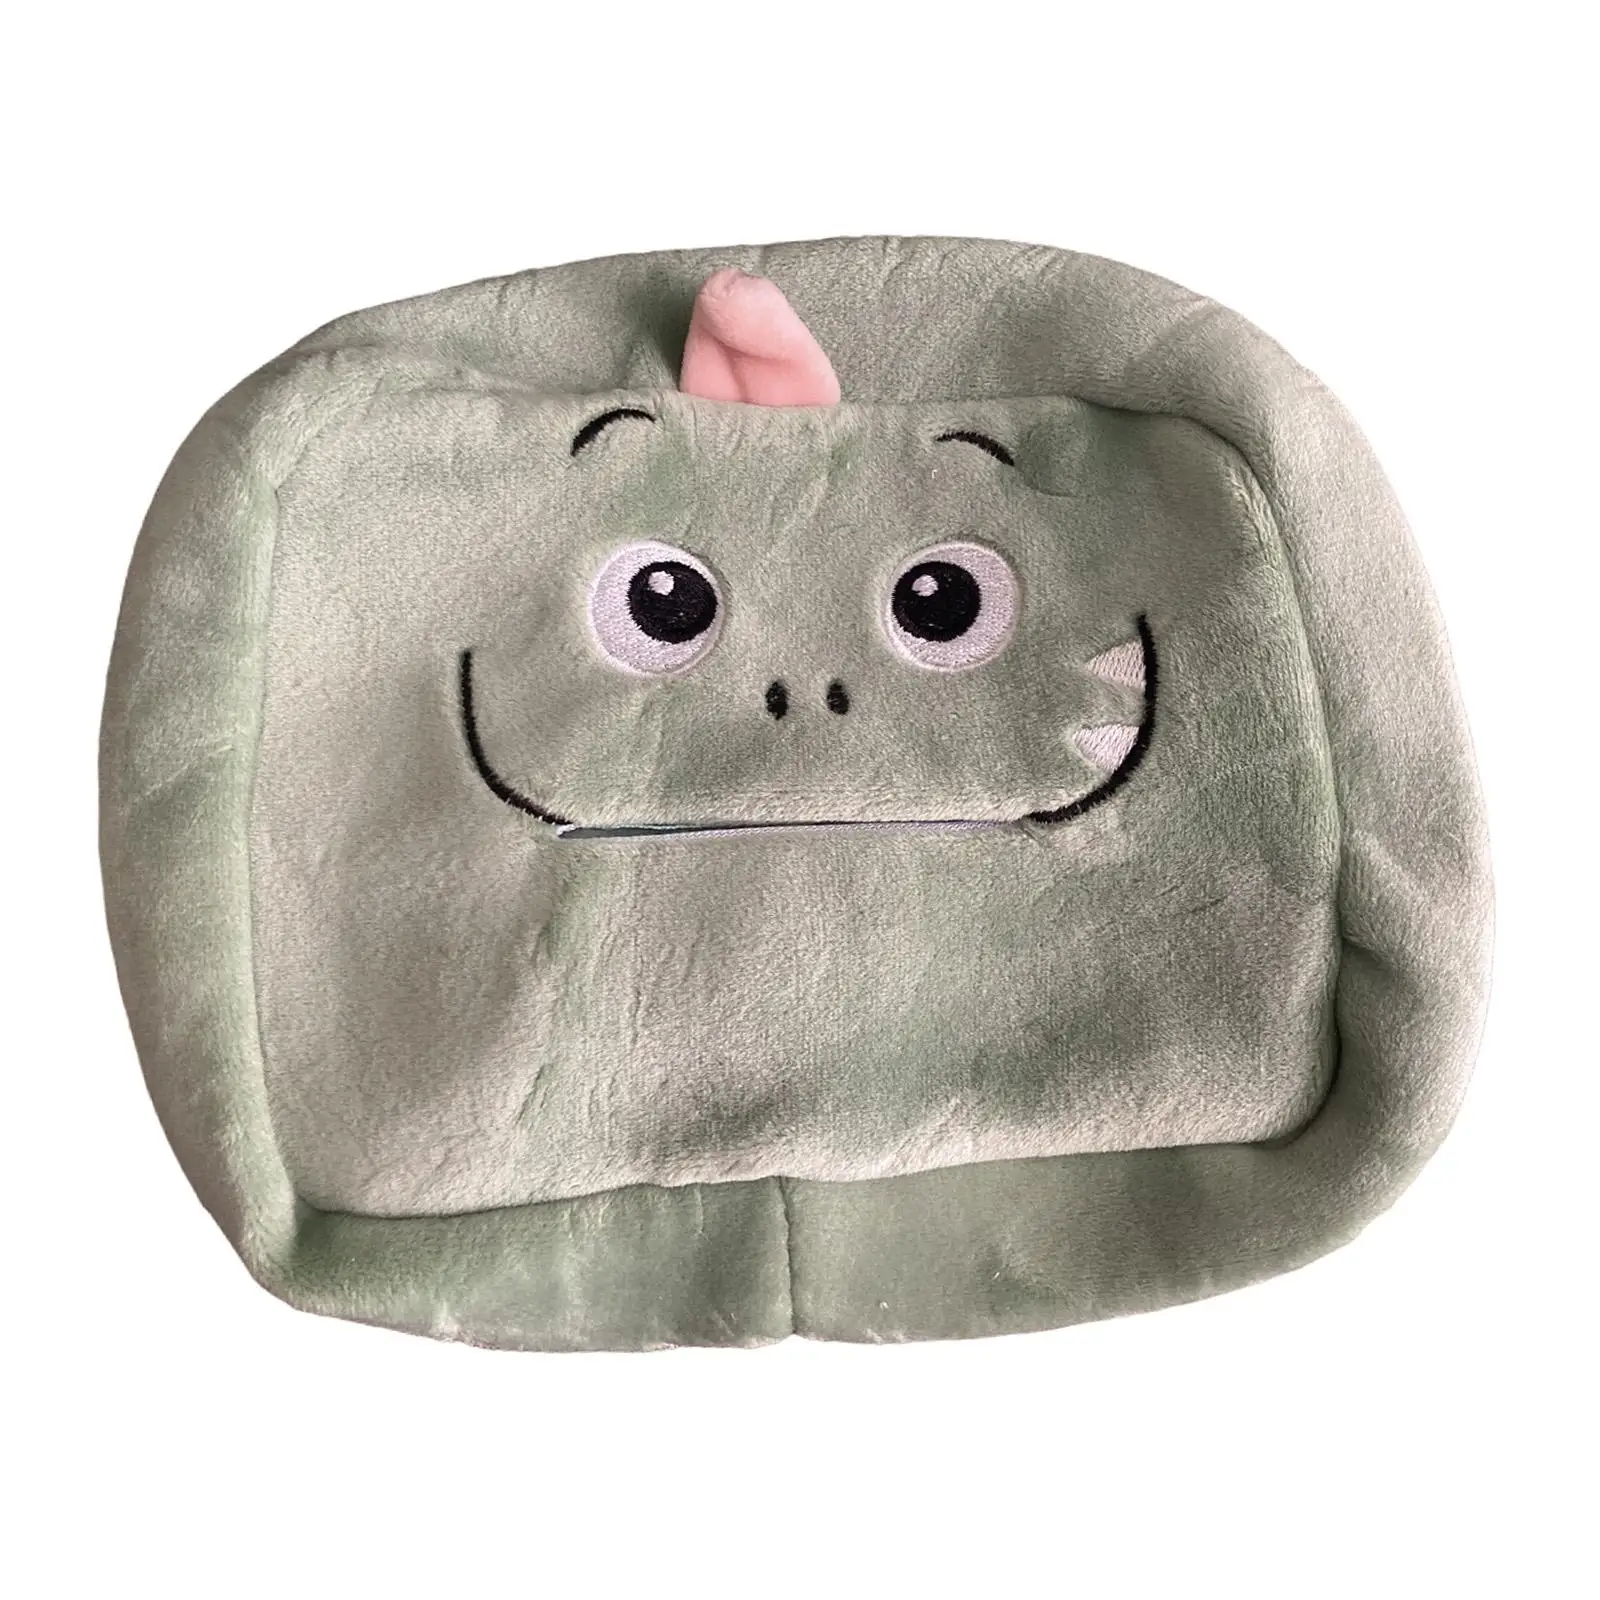 Portable Car Tissue Box Plush Animal Paper Case Cute Pouch for Seat Back Sun Visor with Elastic Band Organizer Tissue Bag